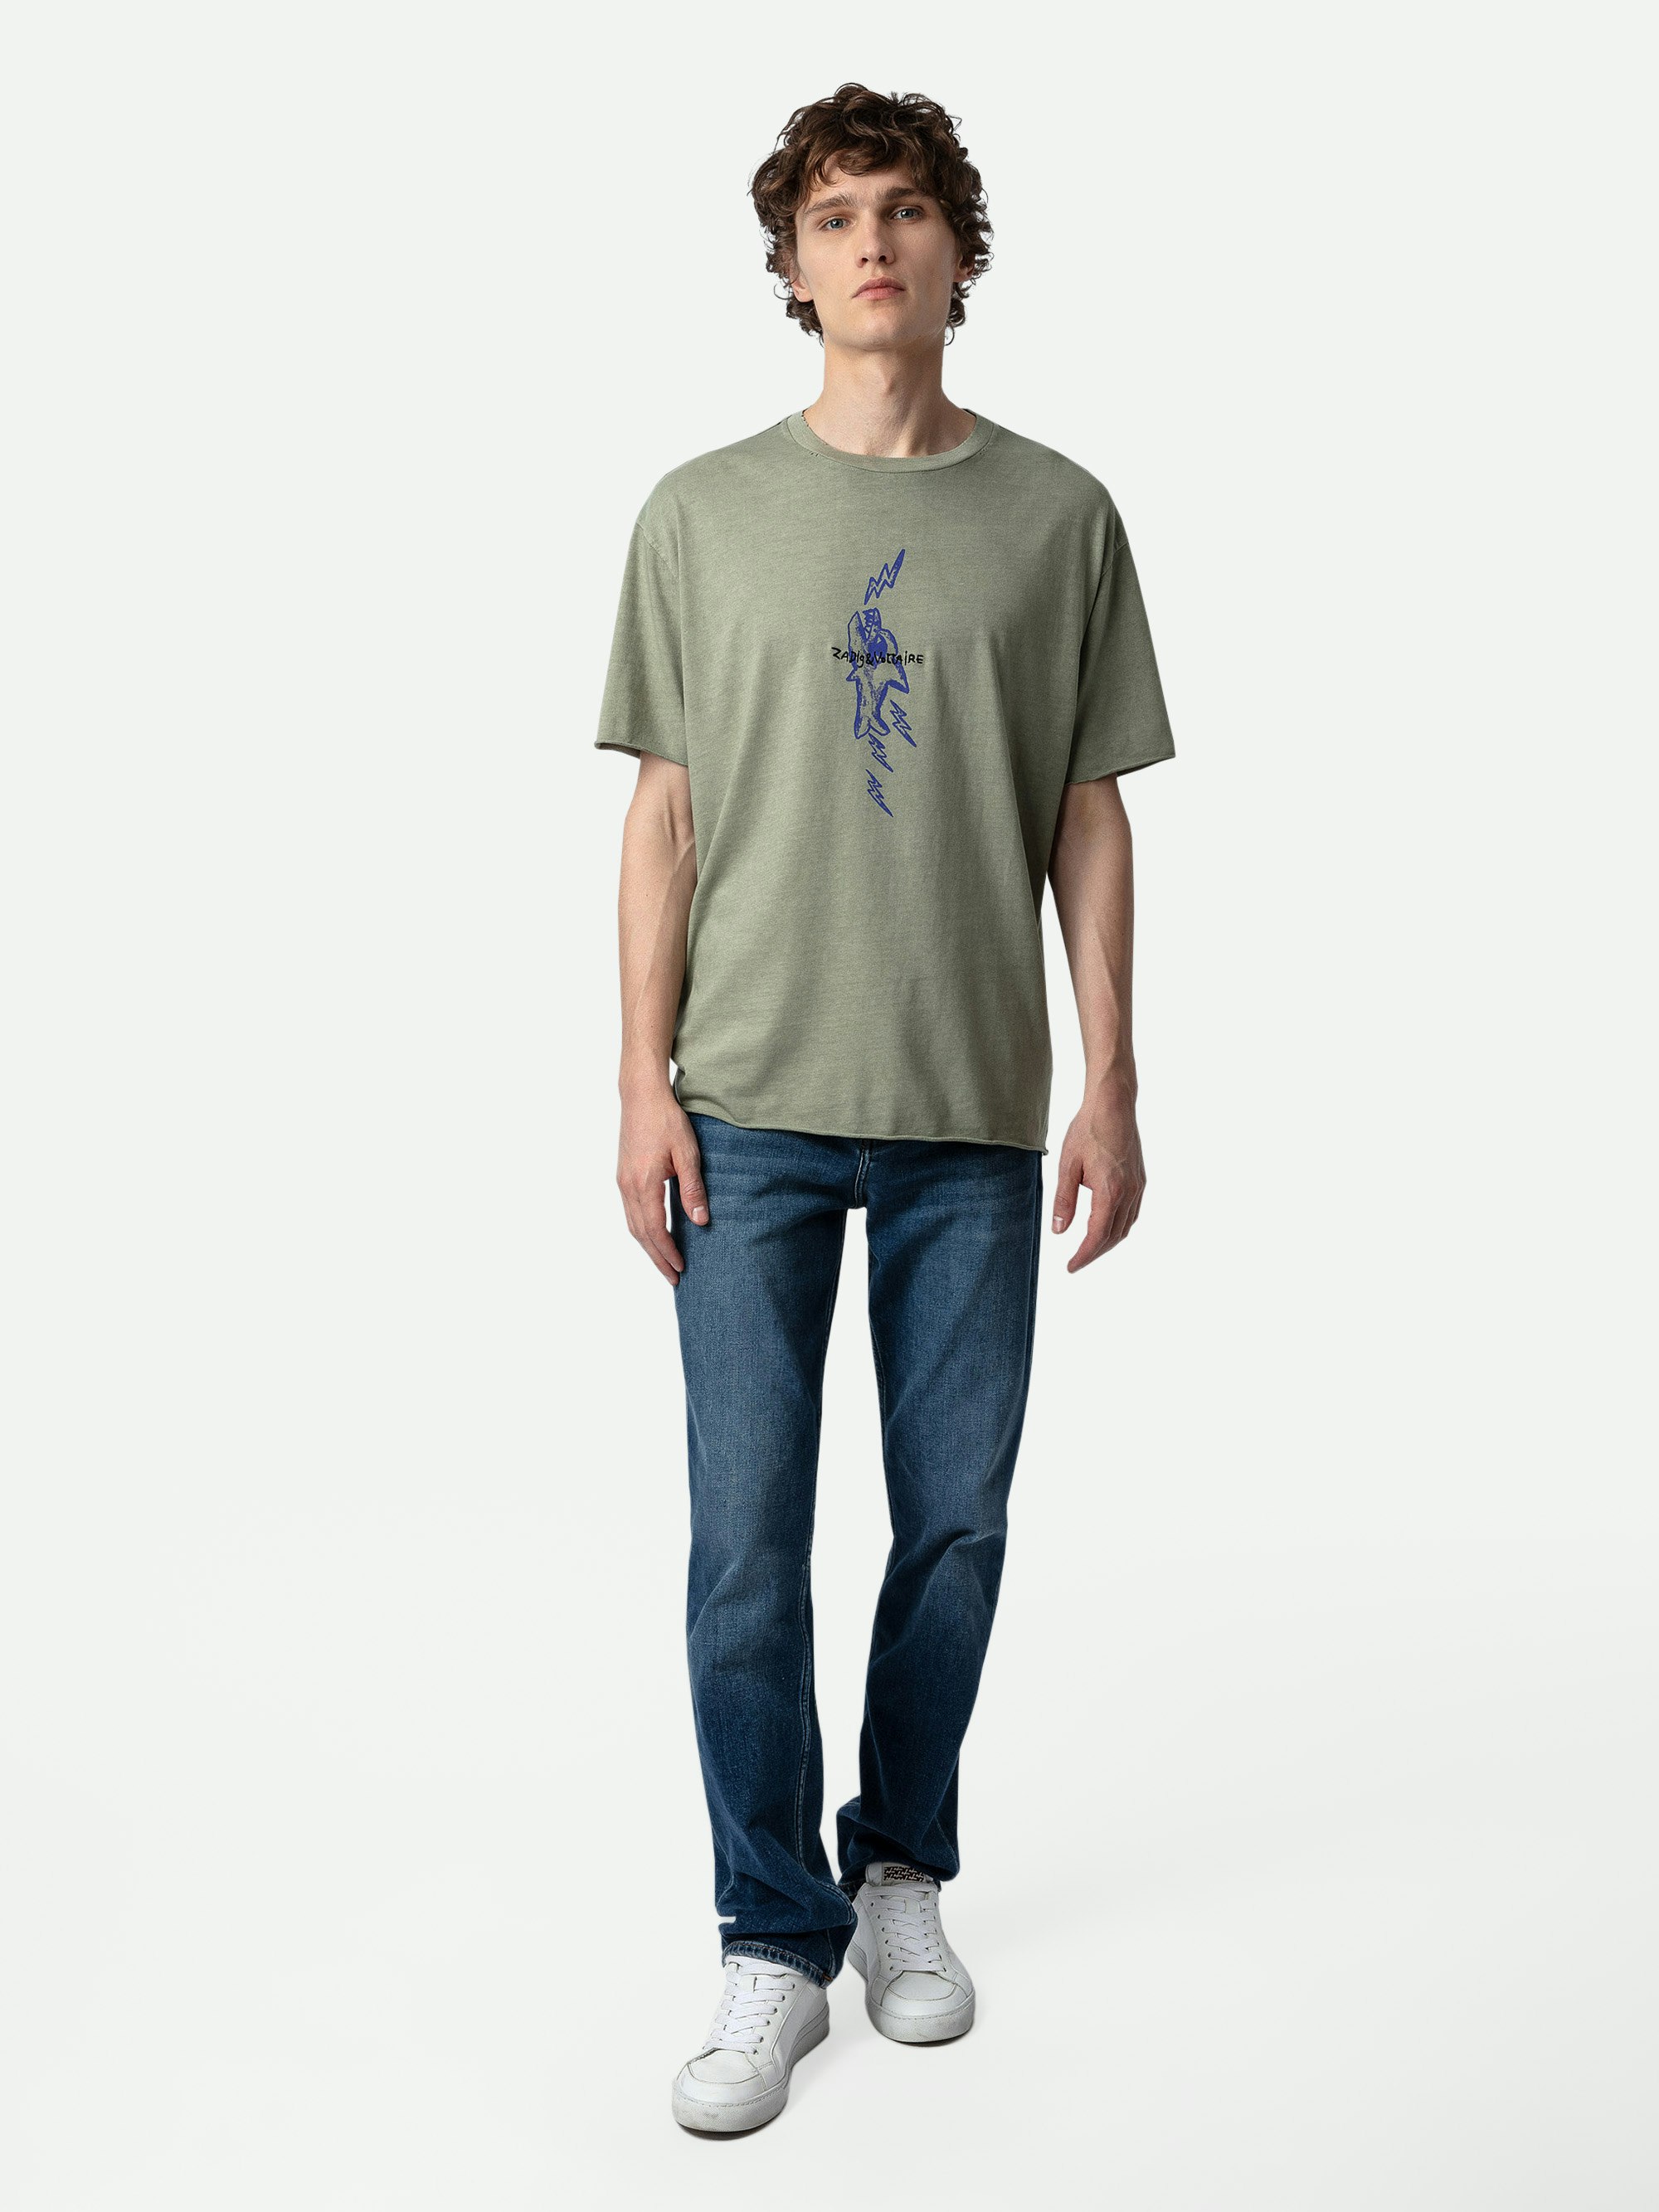 T-Shirt Thilo - Graues Kurzarm-T-Shirt aus Baumwolle in Destroy-Optik mit Shark-Print.